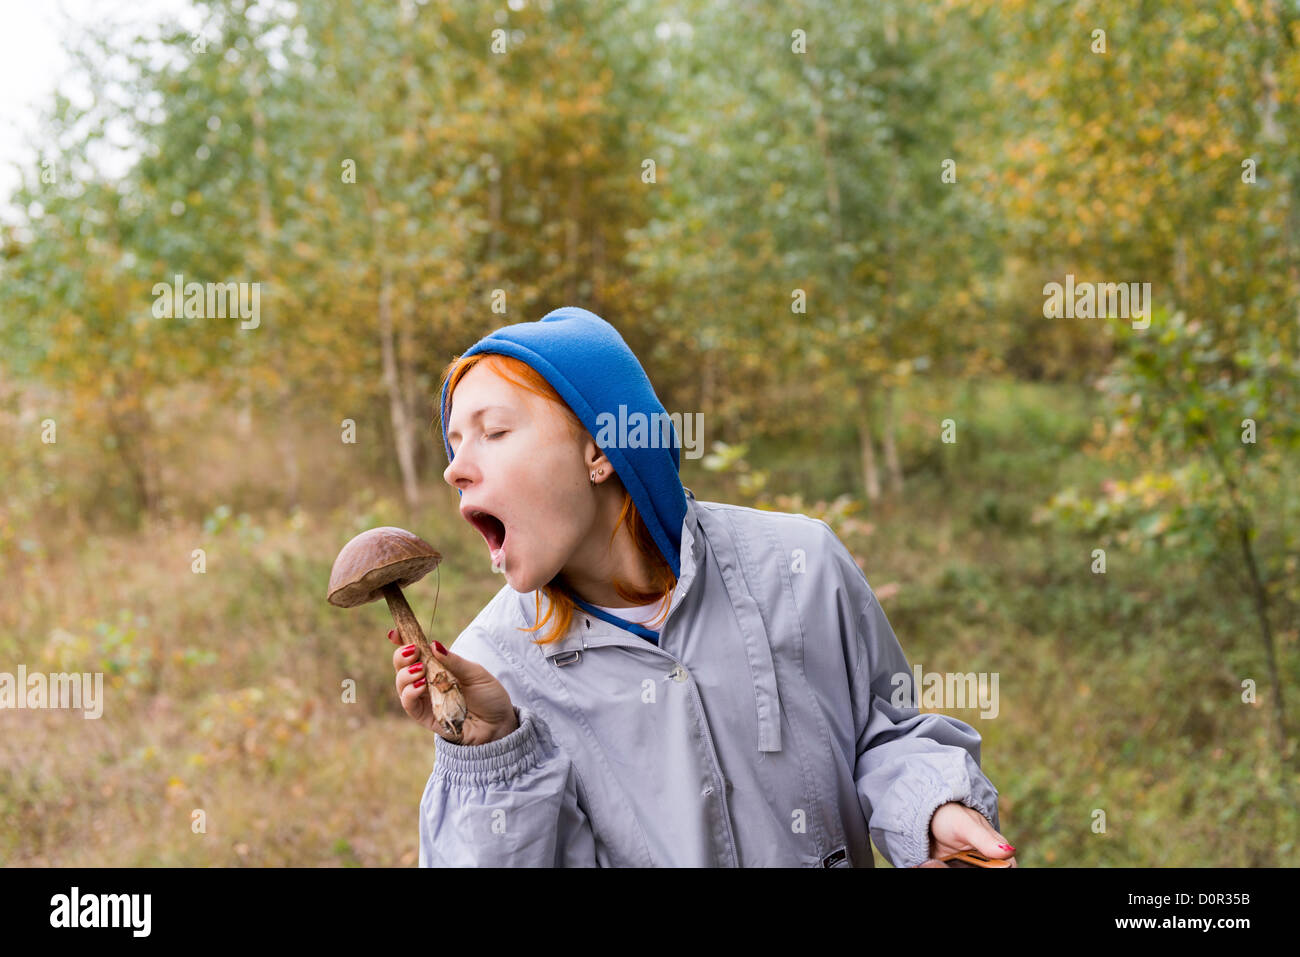 Frau Russland Wald Wald Pilze sammeln Spaß Stockfoto